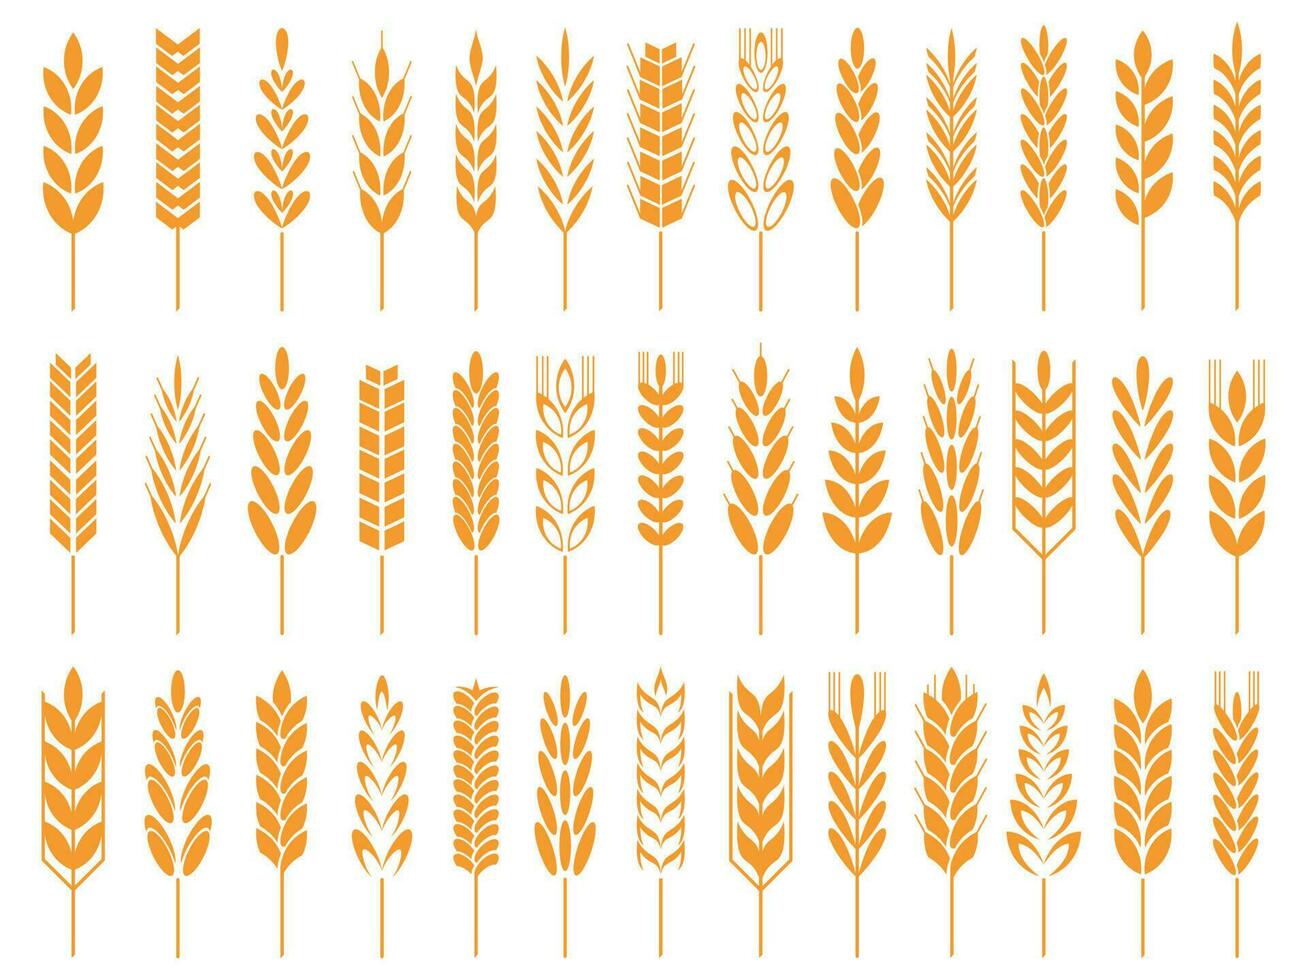 Wheat grain icons. Wheats bread logo, farm grains and rye stalk symbol isolated vector icon